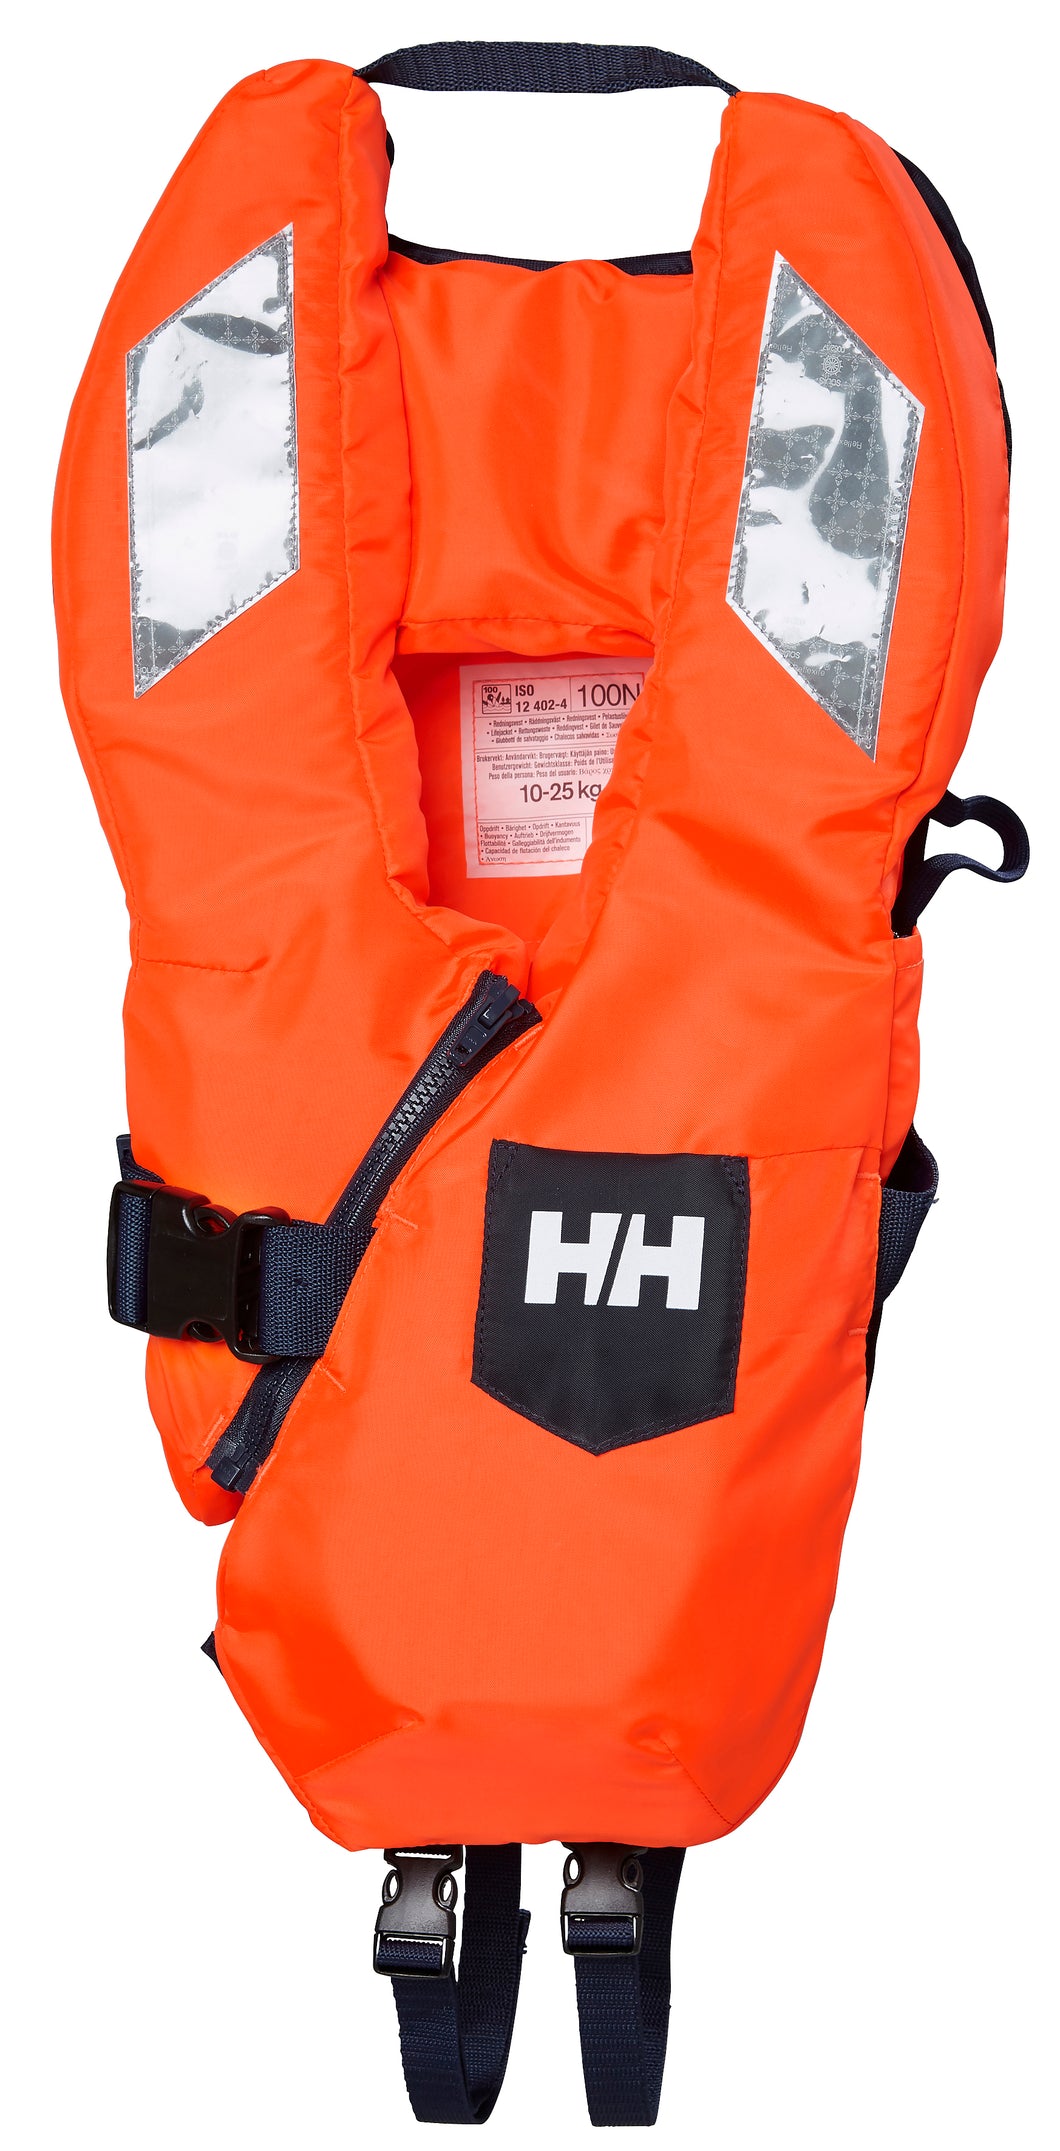 Helly Hansen Kid Safe Life Jacket (10/25kgs)